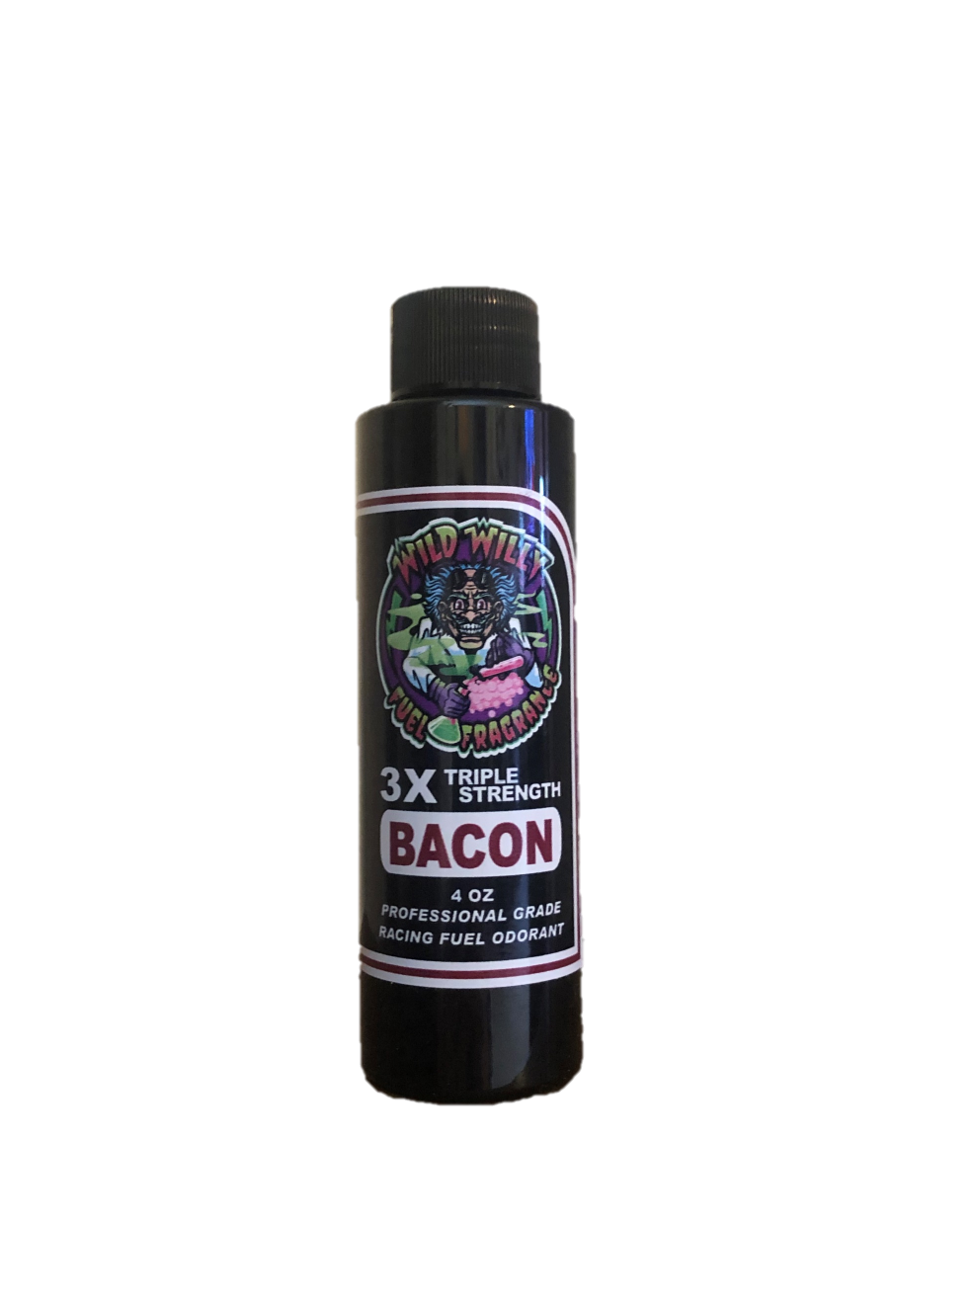 Bacon - Wild Willy Fuel Fragrance - 3X Triple Strength!